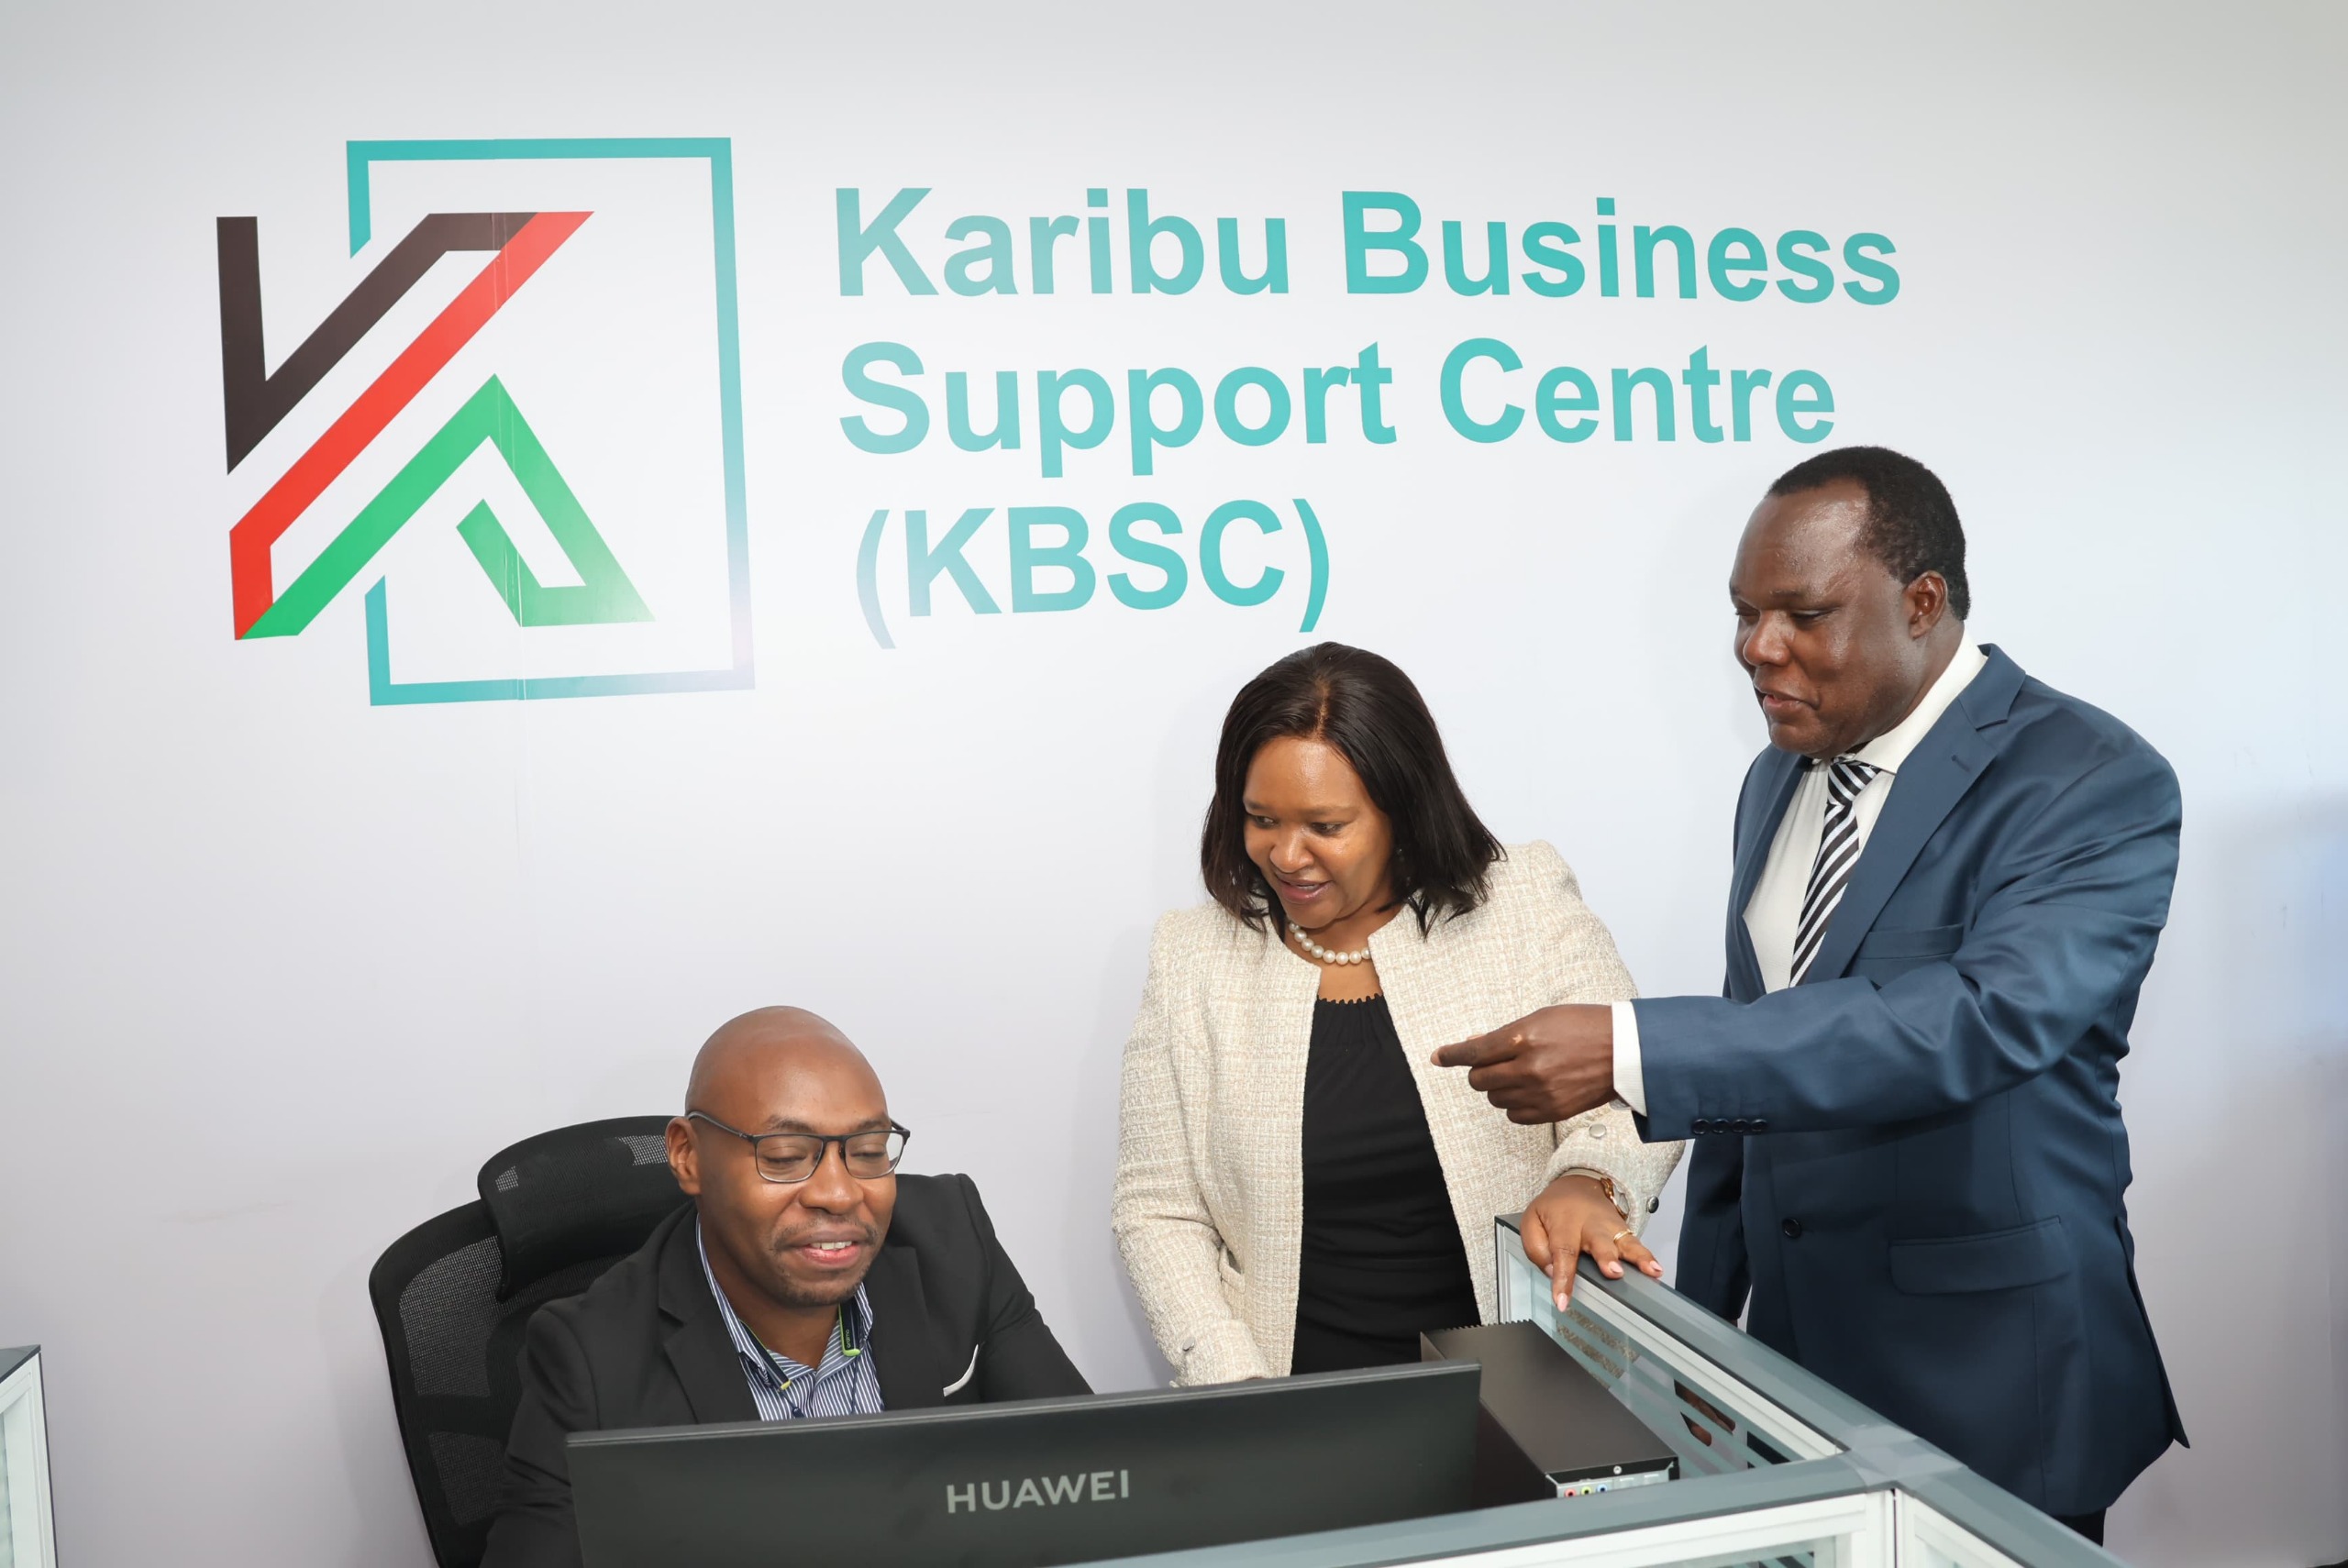 Karibu Business Support Centres